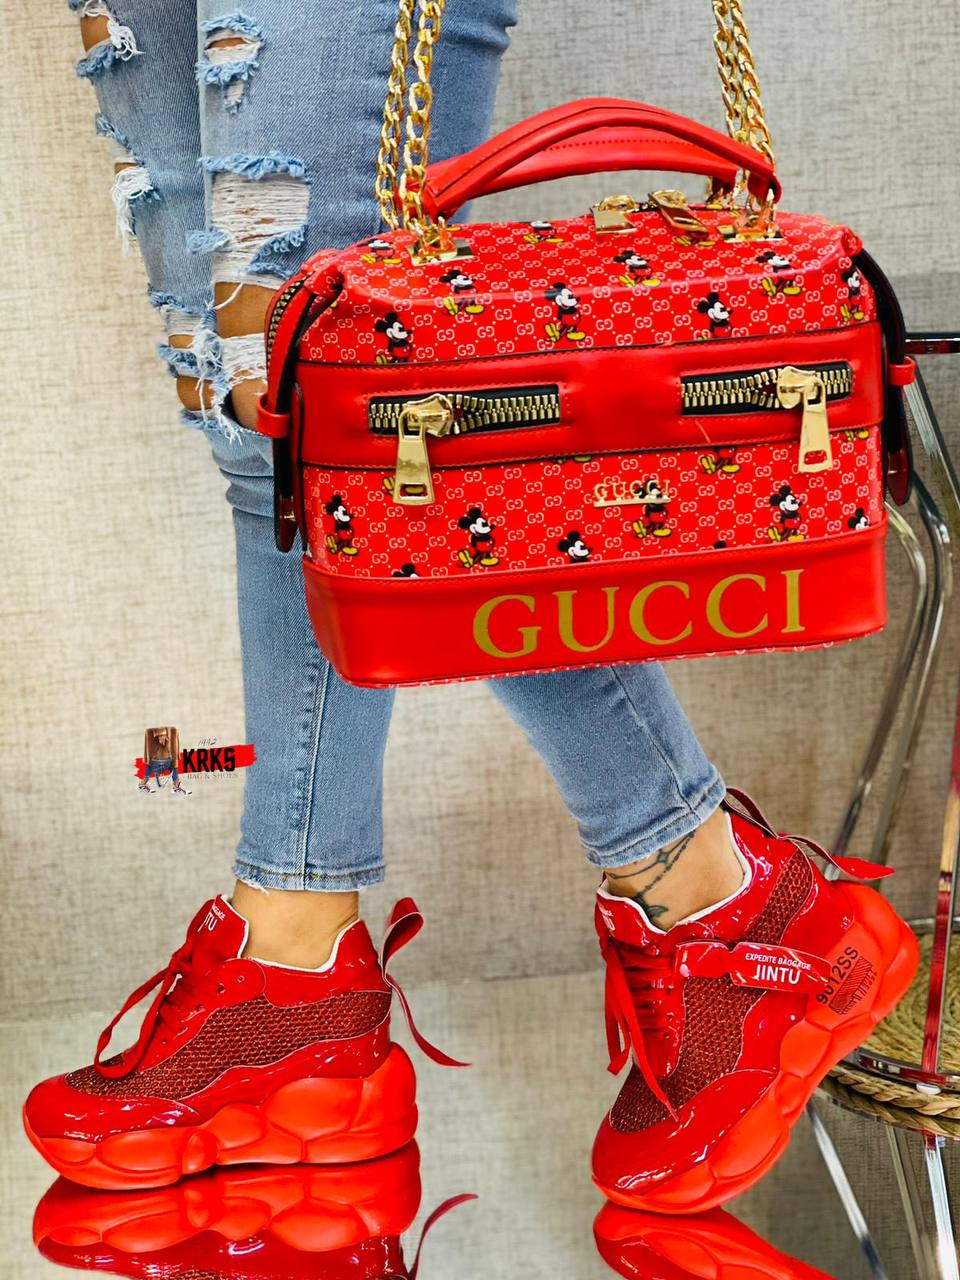 Gucci Sneakers & Purse Set